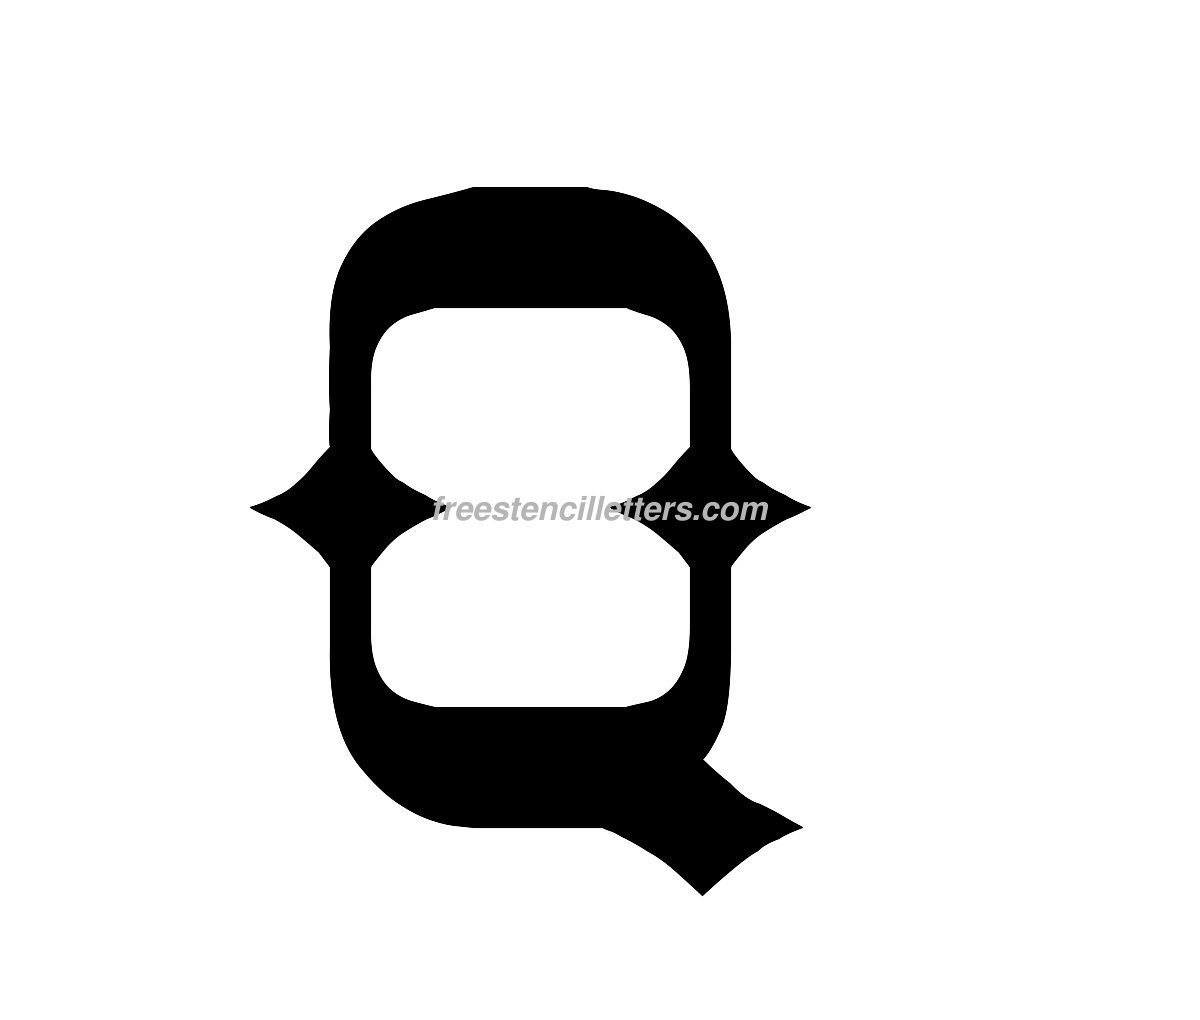 Print Q Letter Stencil